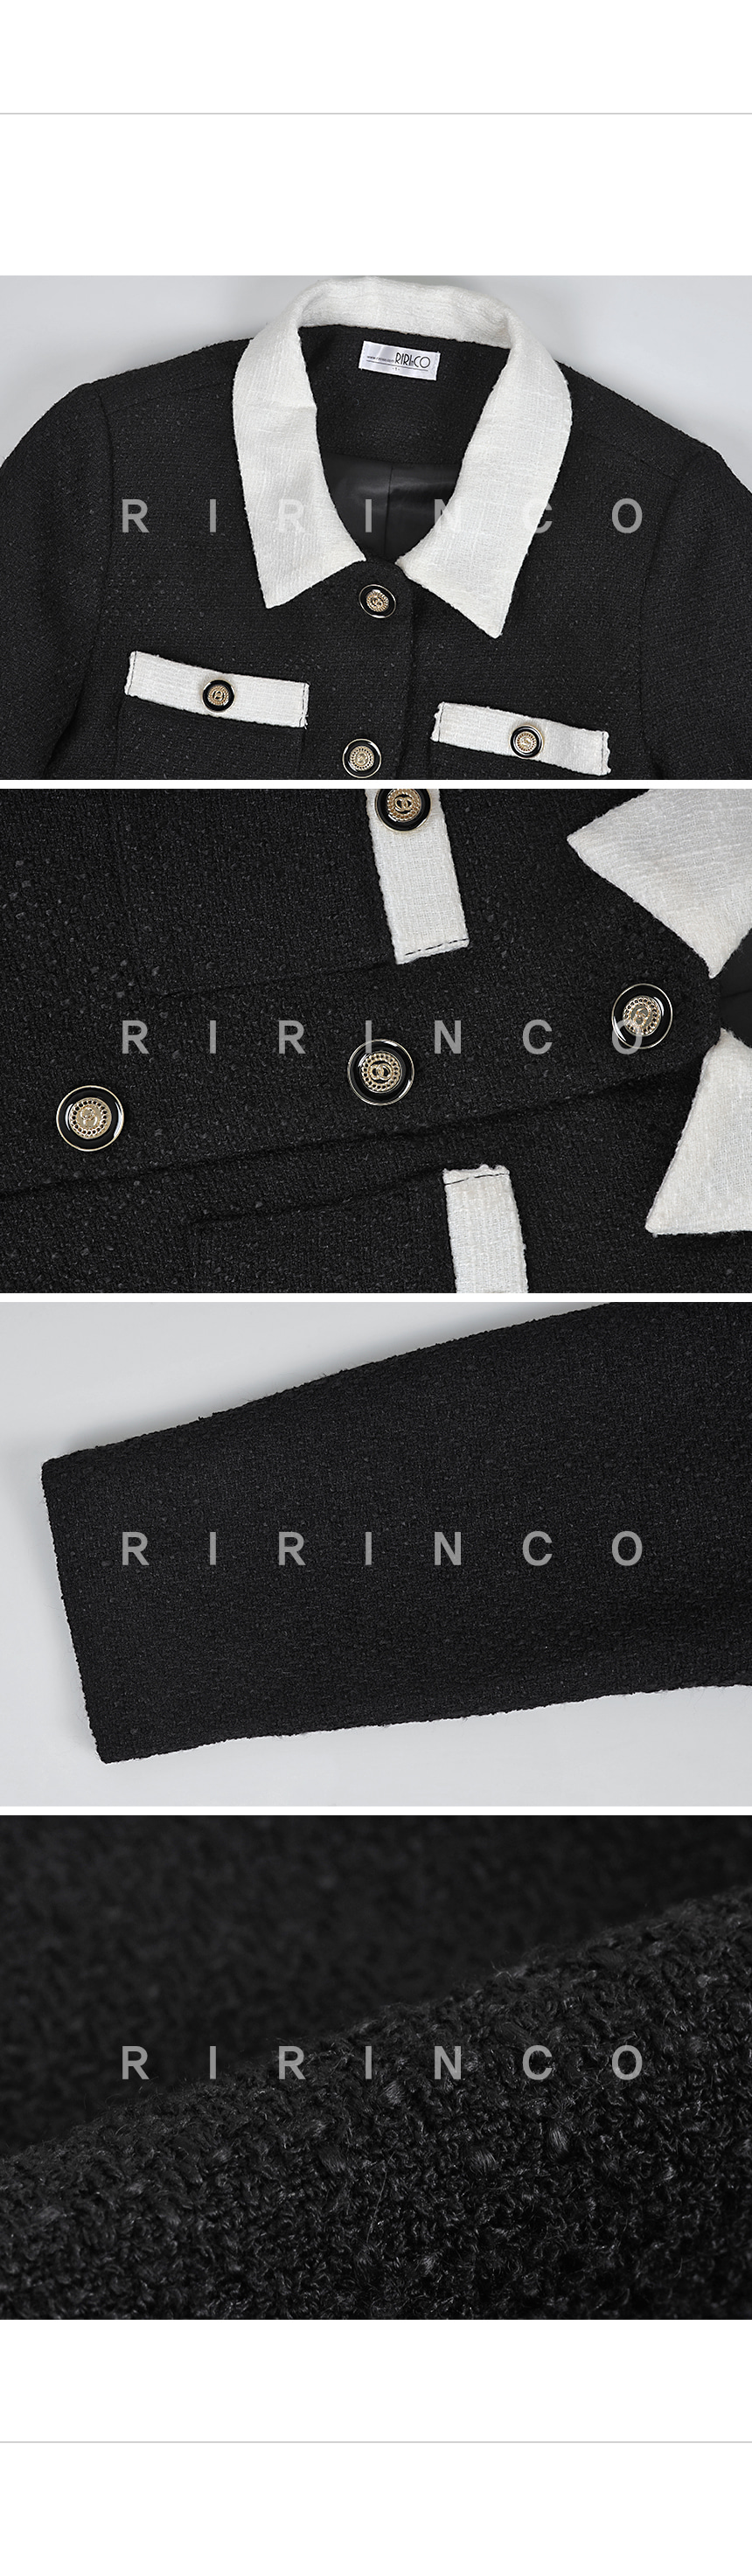 RIRINCO ツイード配色ツーピースクロップドジャケット